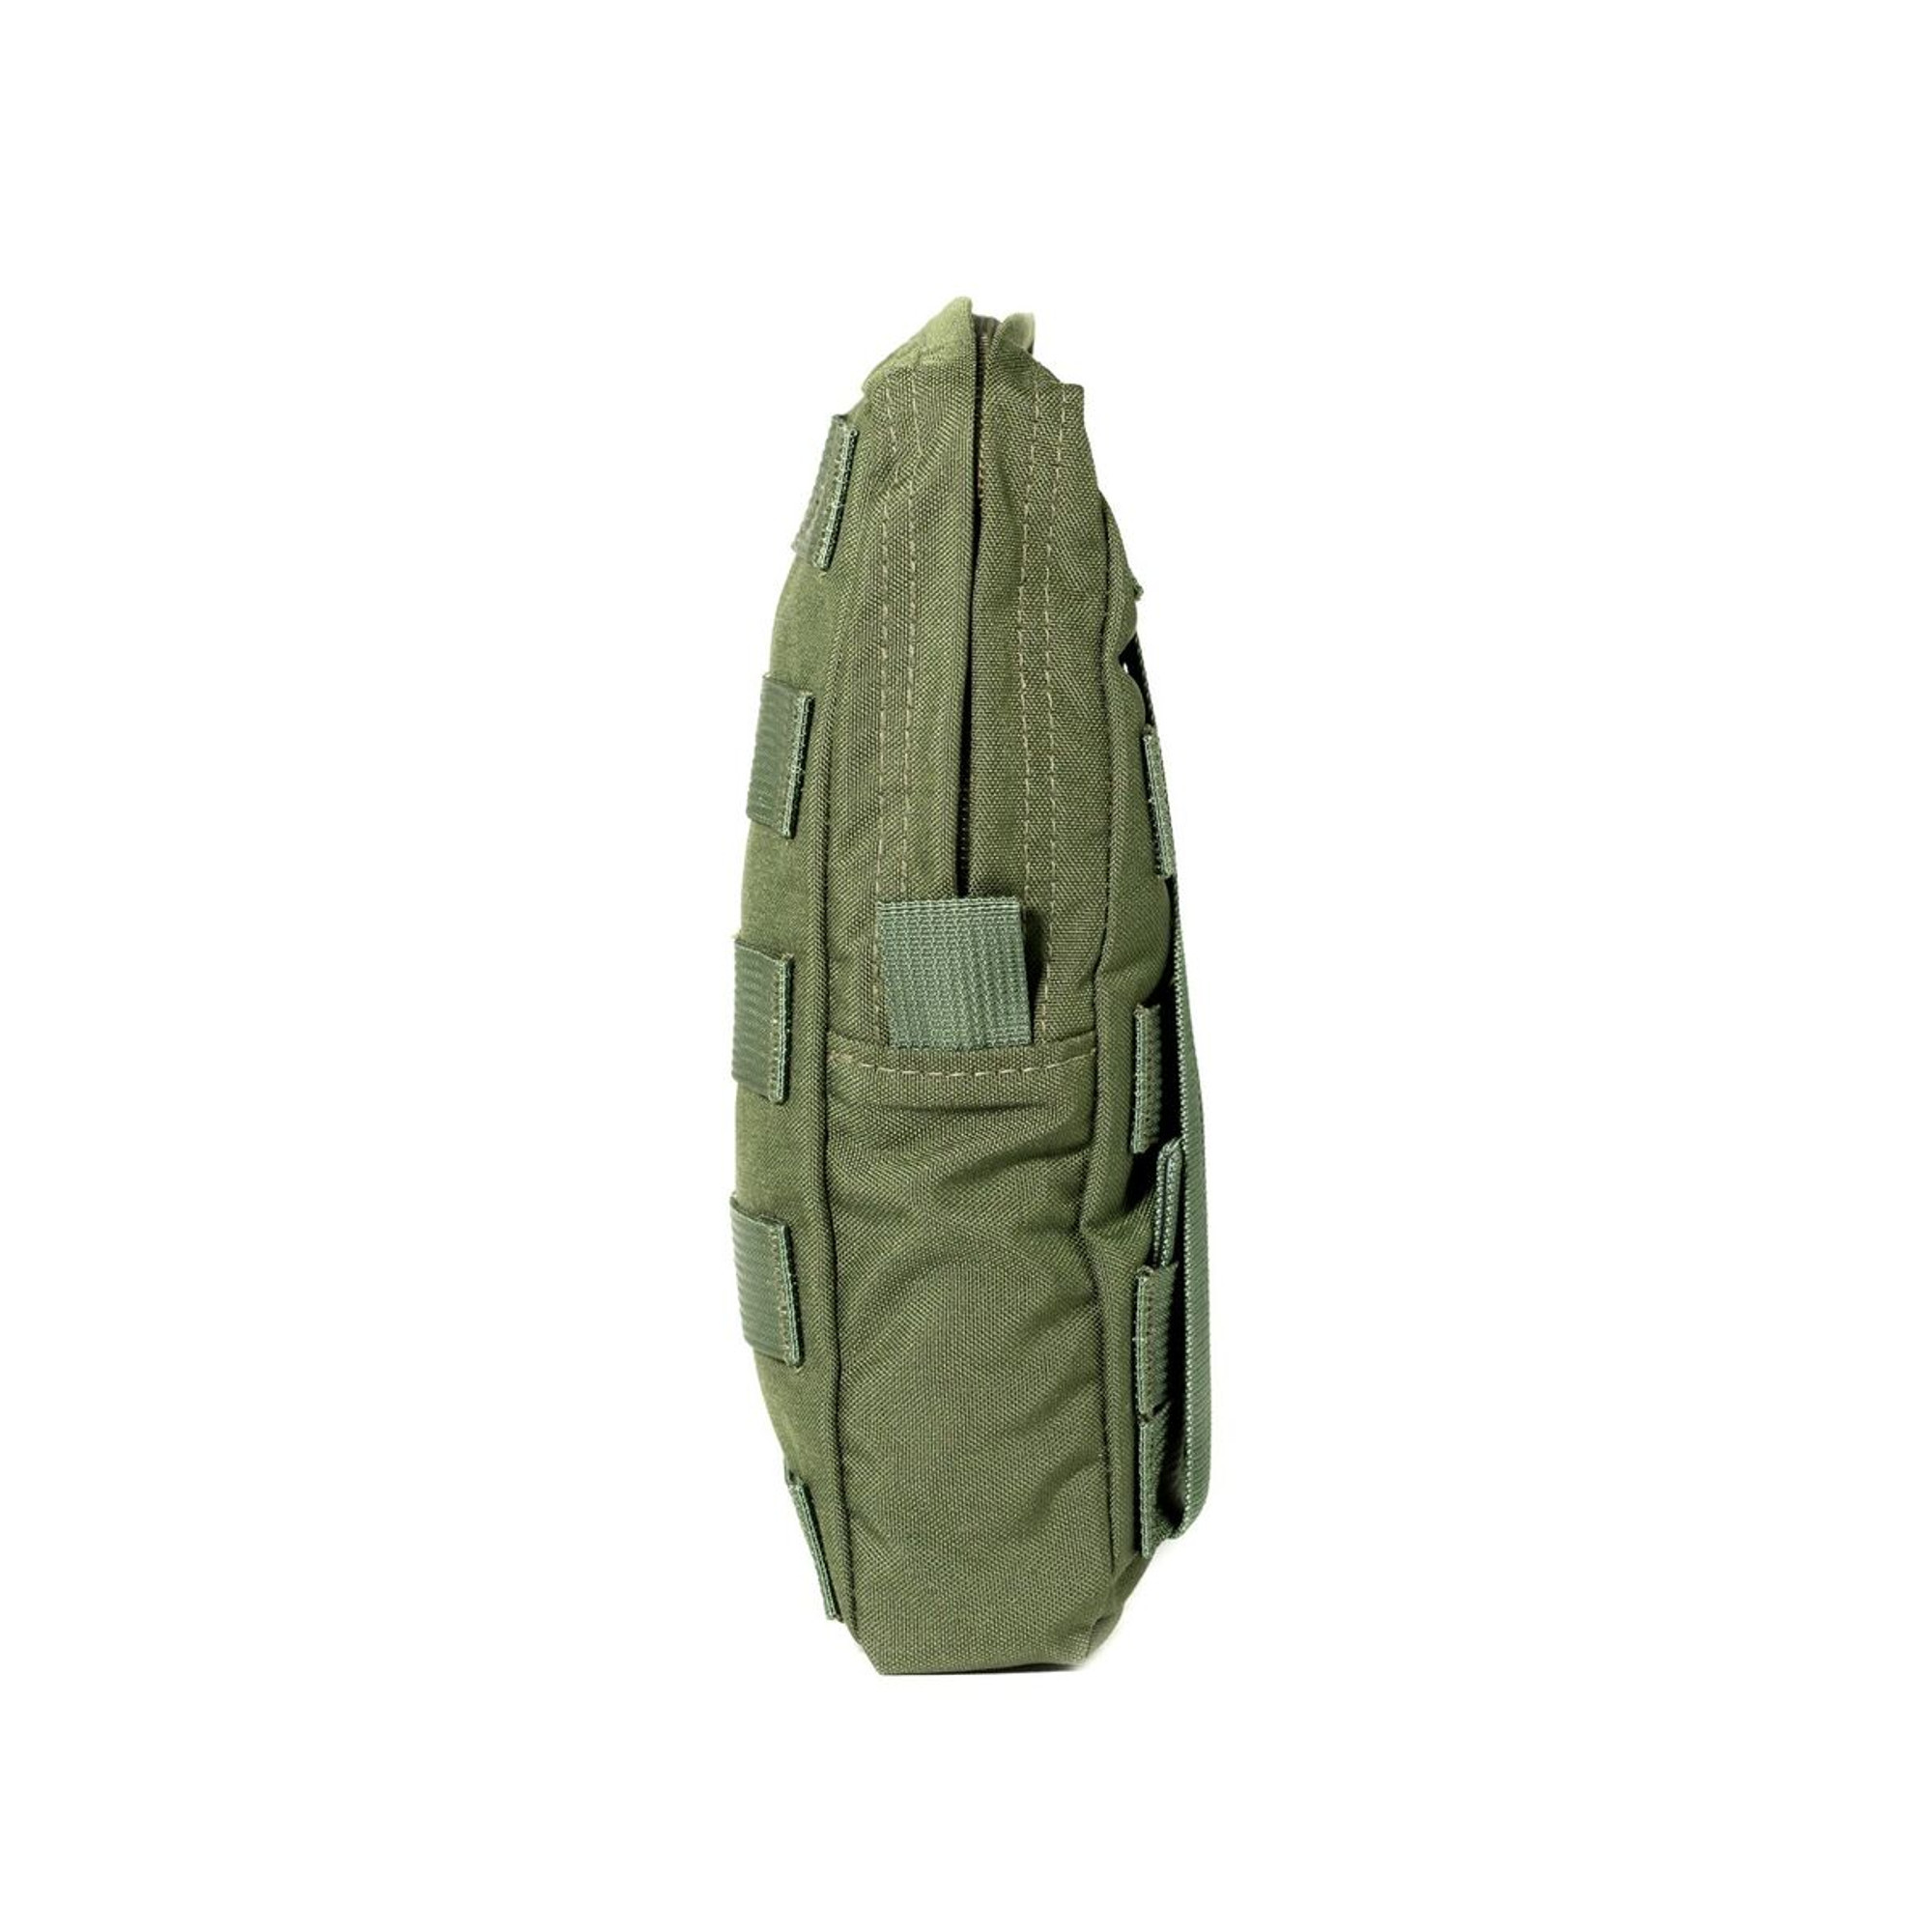 T3 MOLLE Assault Backpack - FINAL SALE - T3 Gear